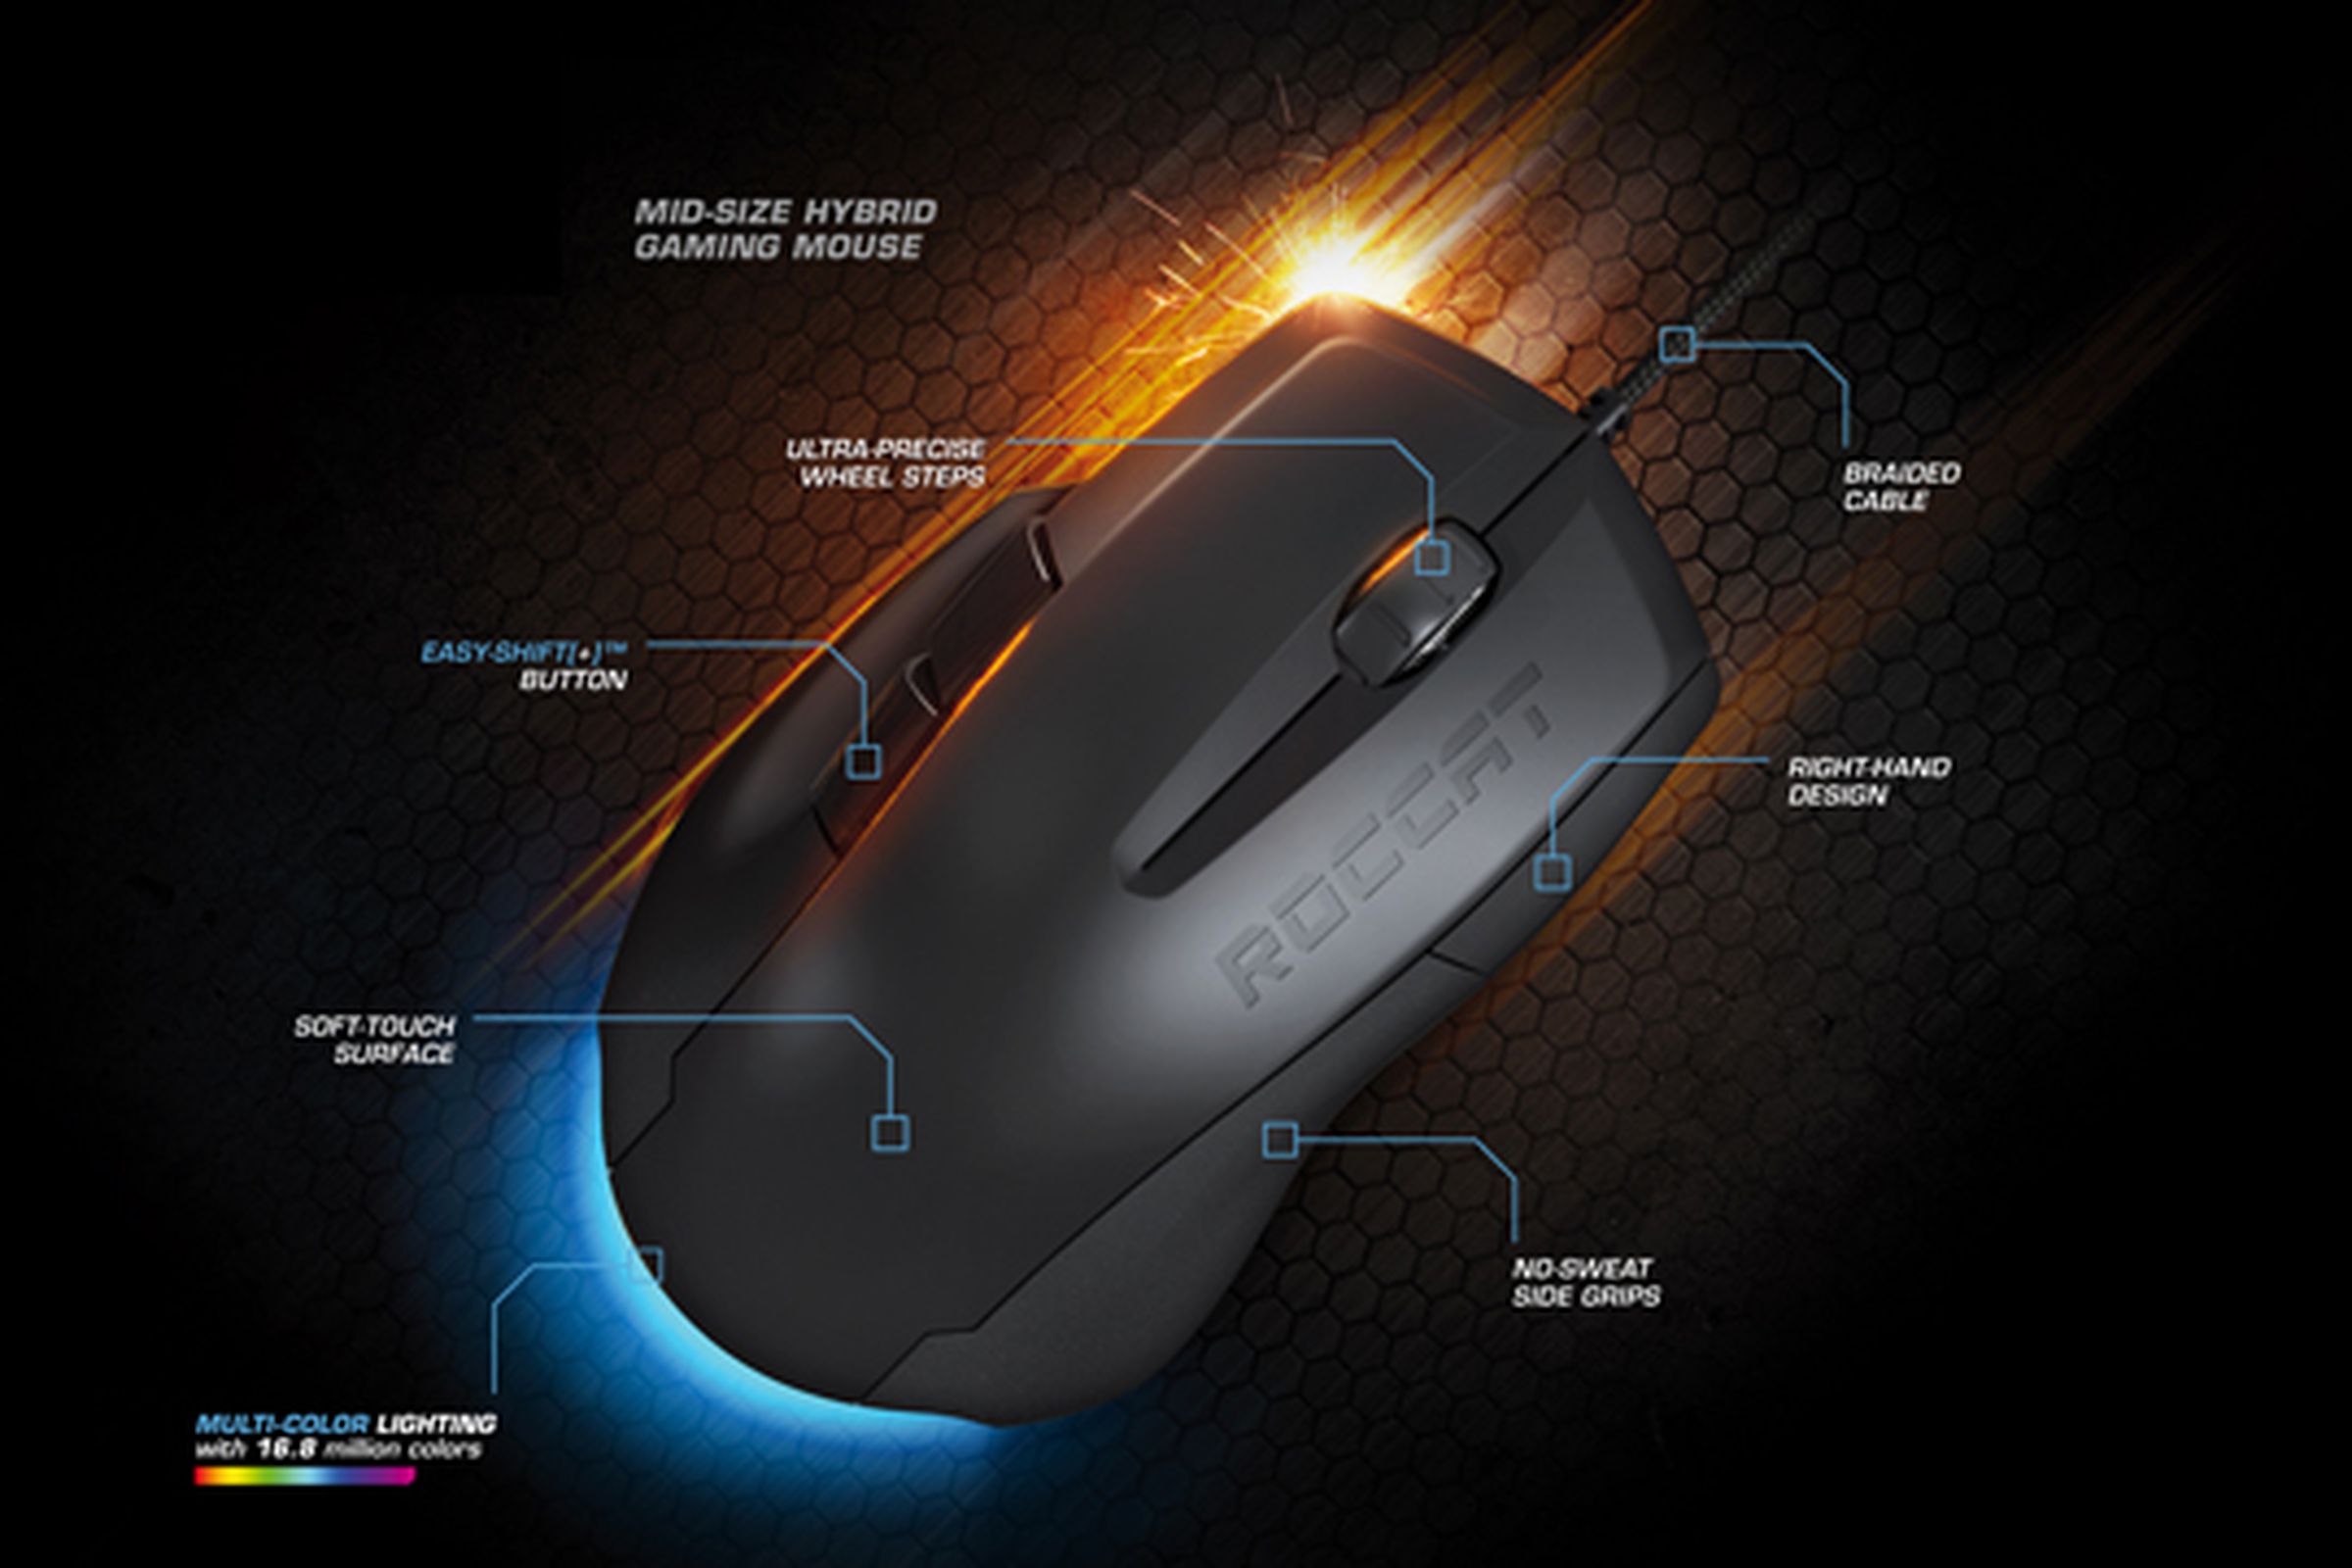 Roccat Savu Mid-Size Hybrid Gaming Mouse